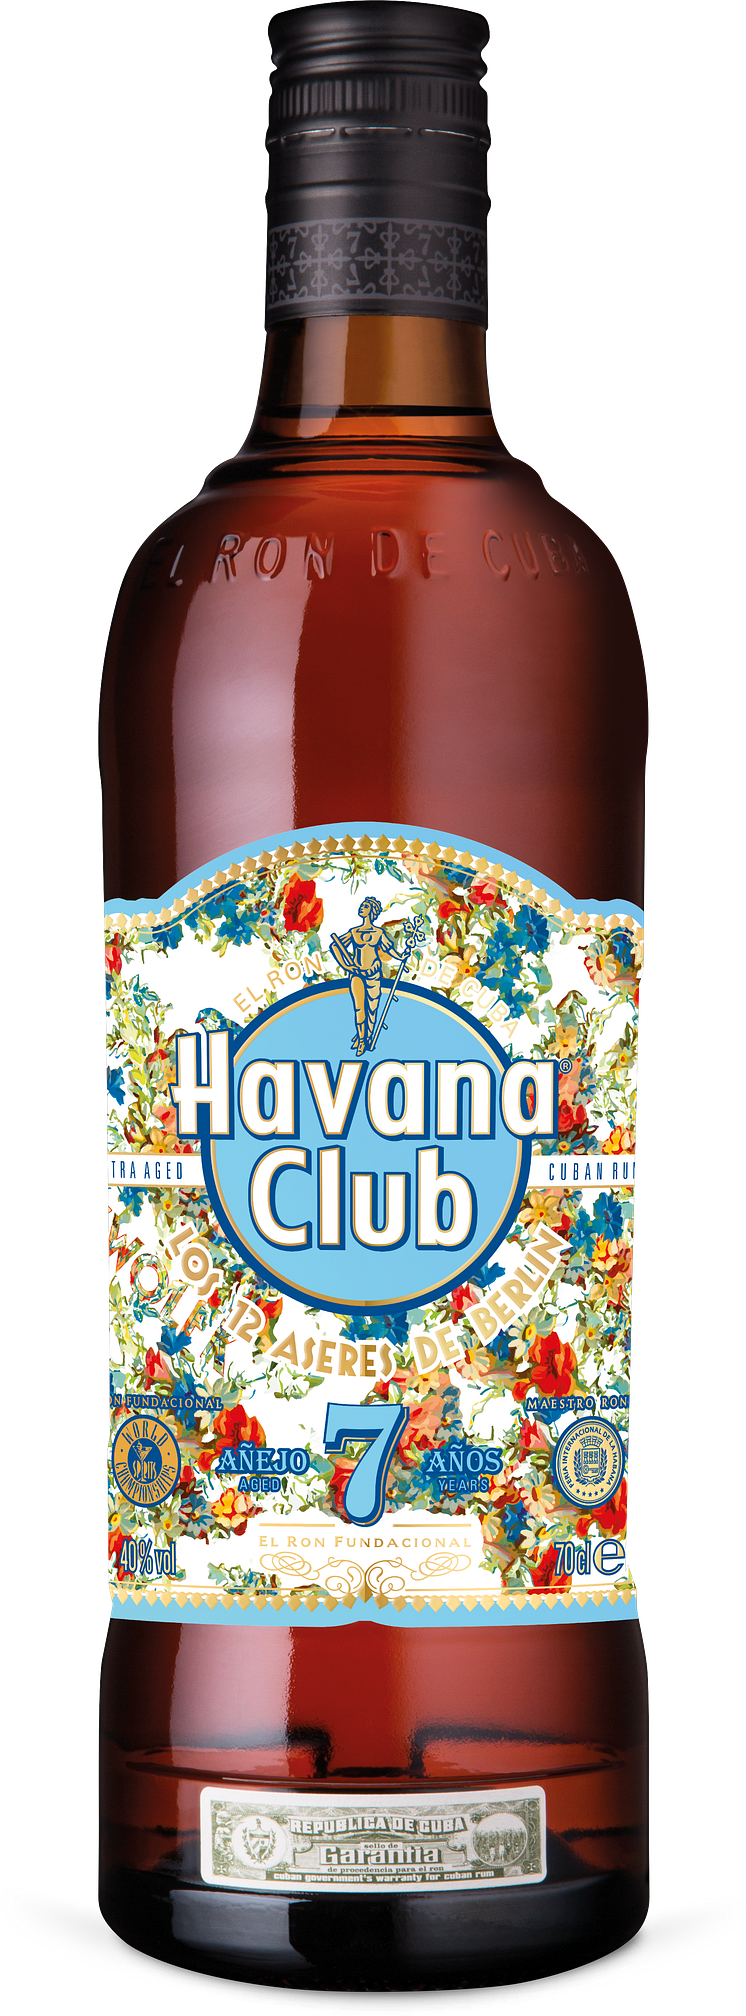 Havana Club Limited Edition 12K